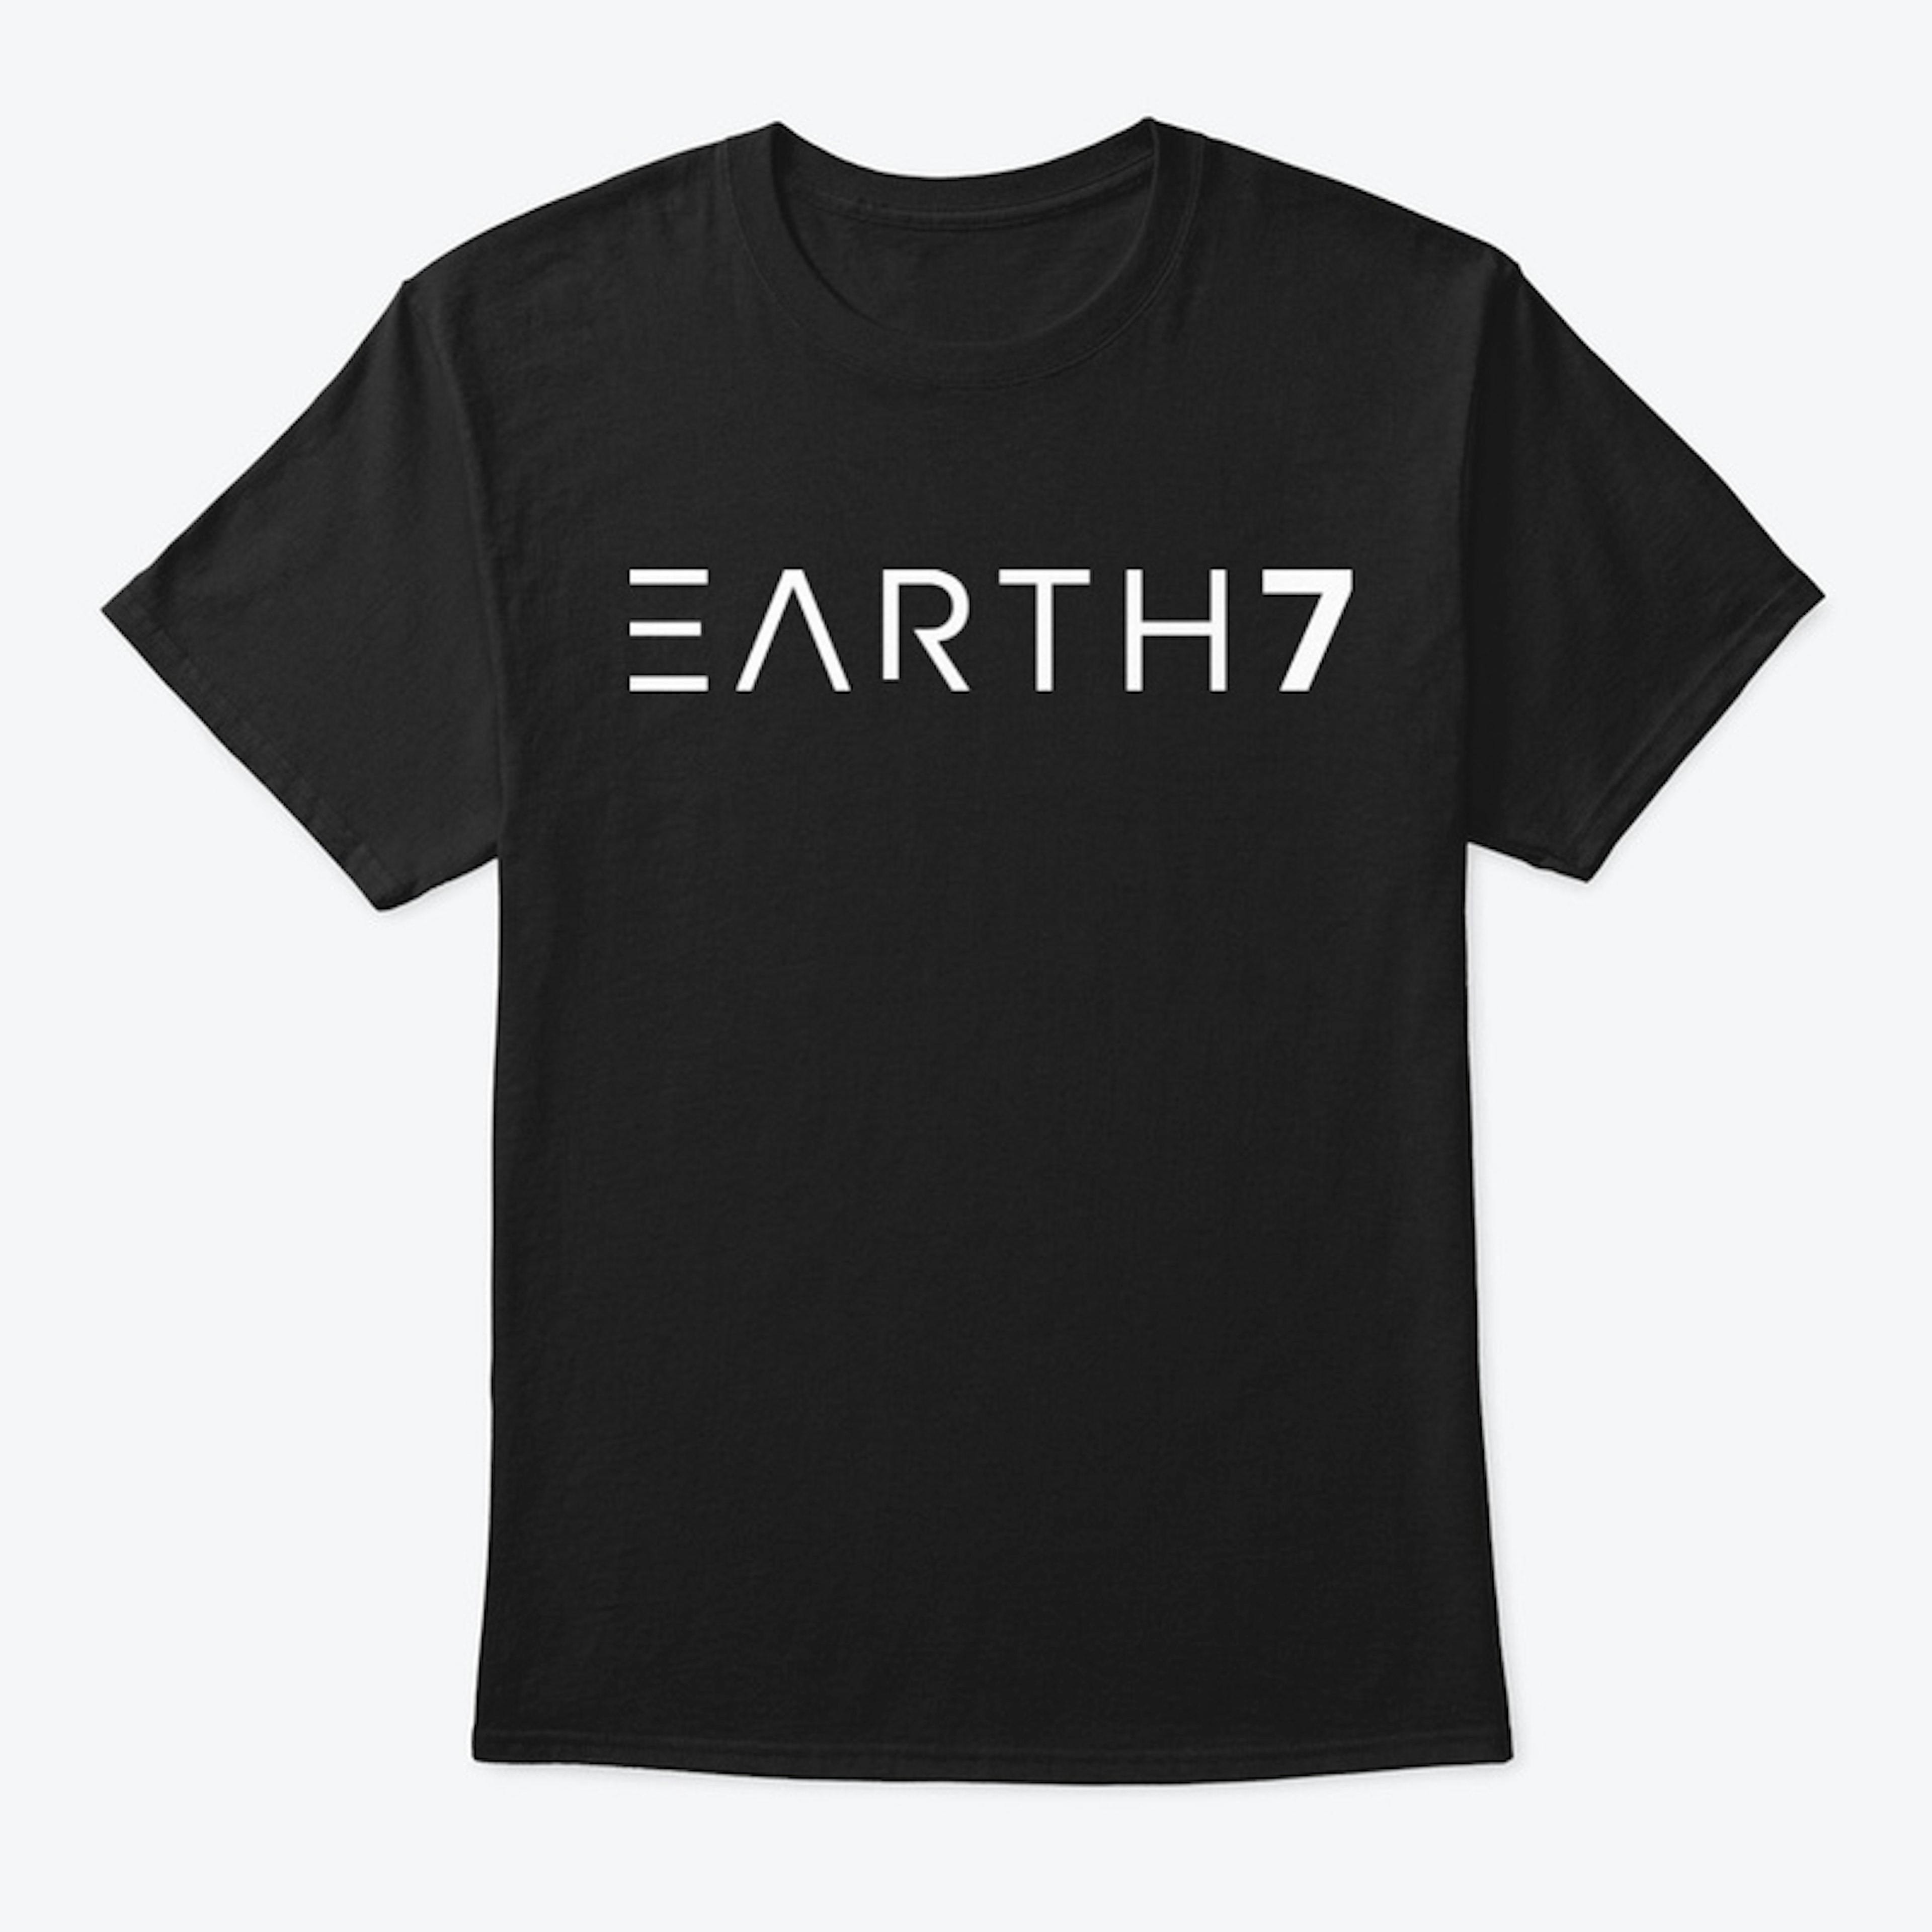 EARTH7 Logotype